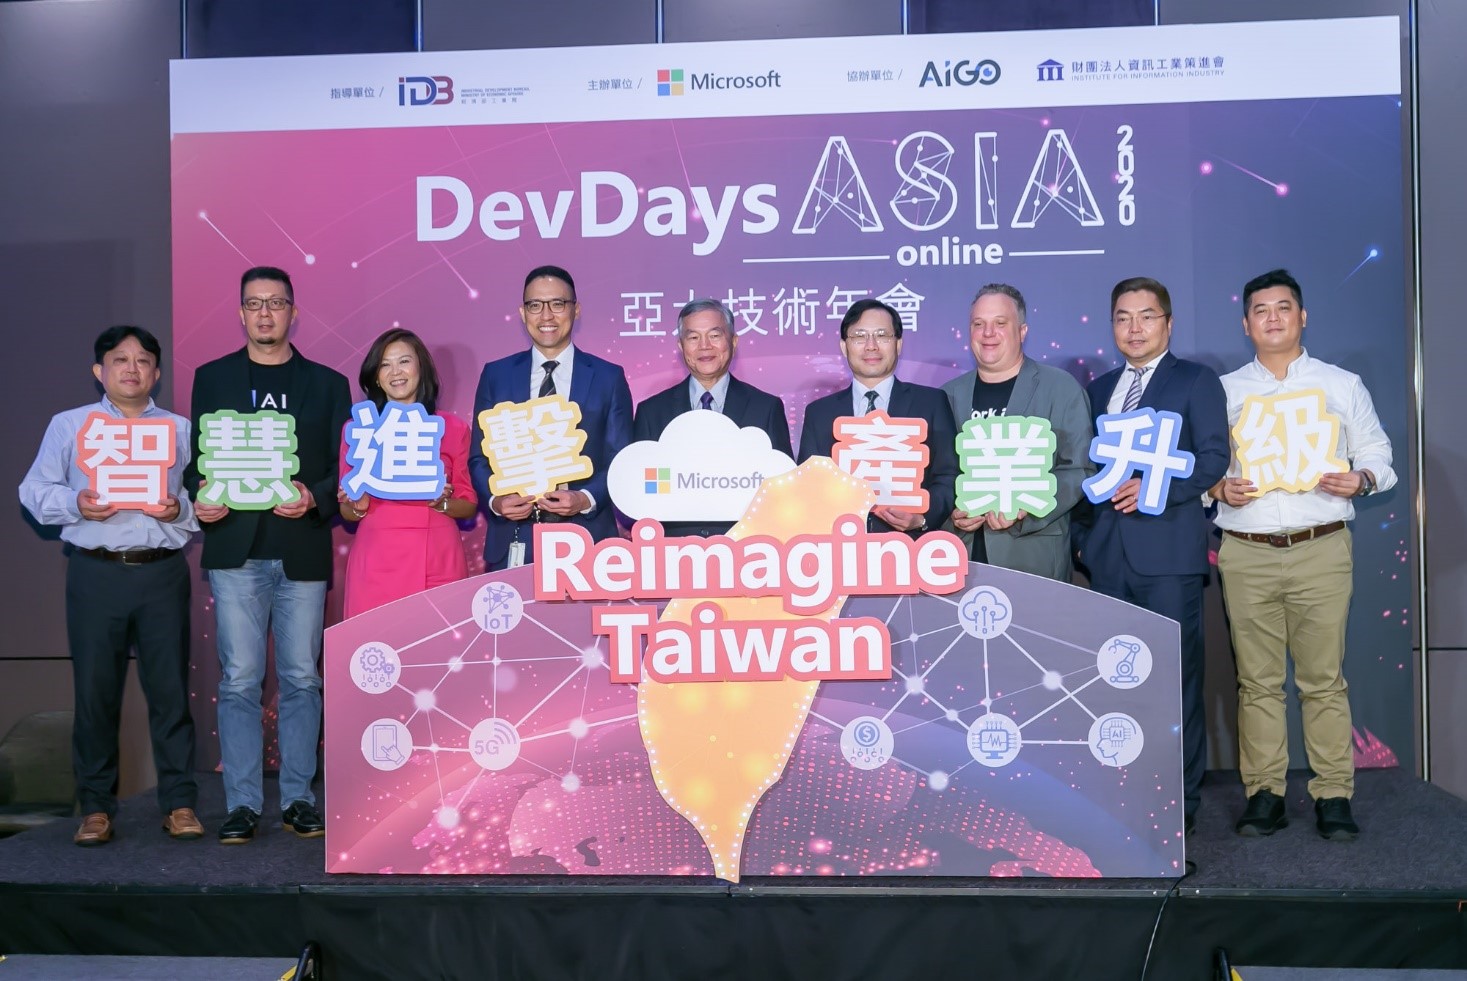 DevDays conference